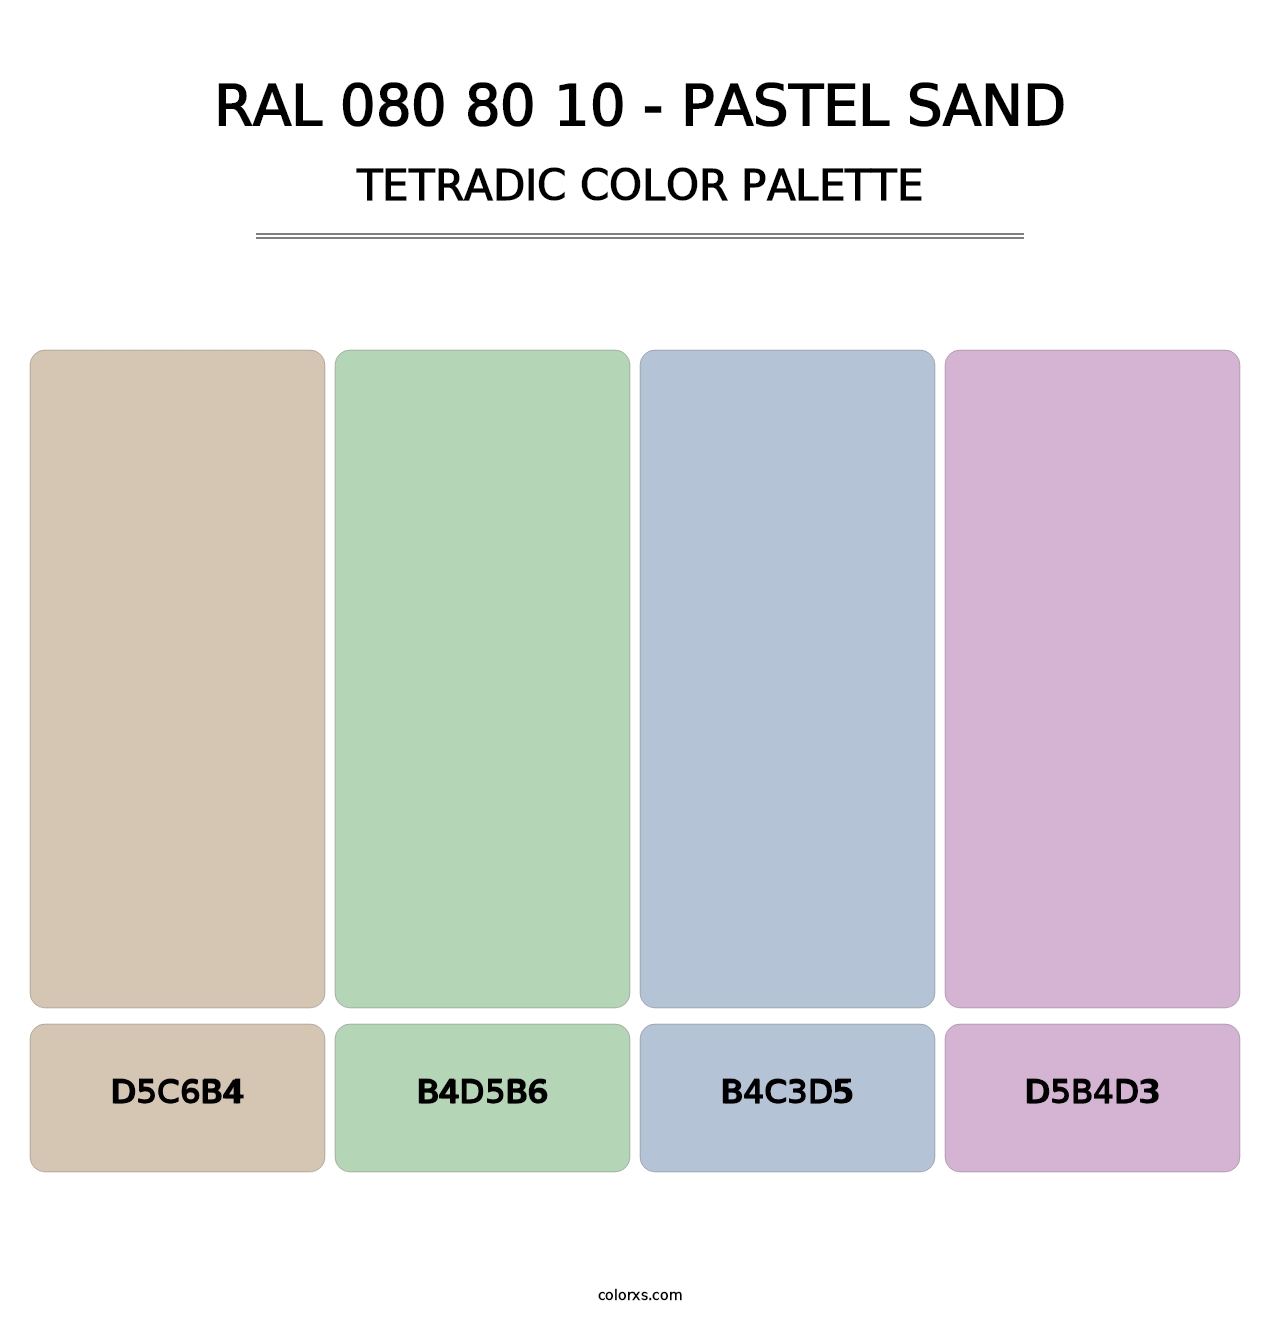 RAL 080 80 10 - Pastel Sand - Tetradic Color Palette